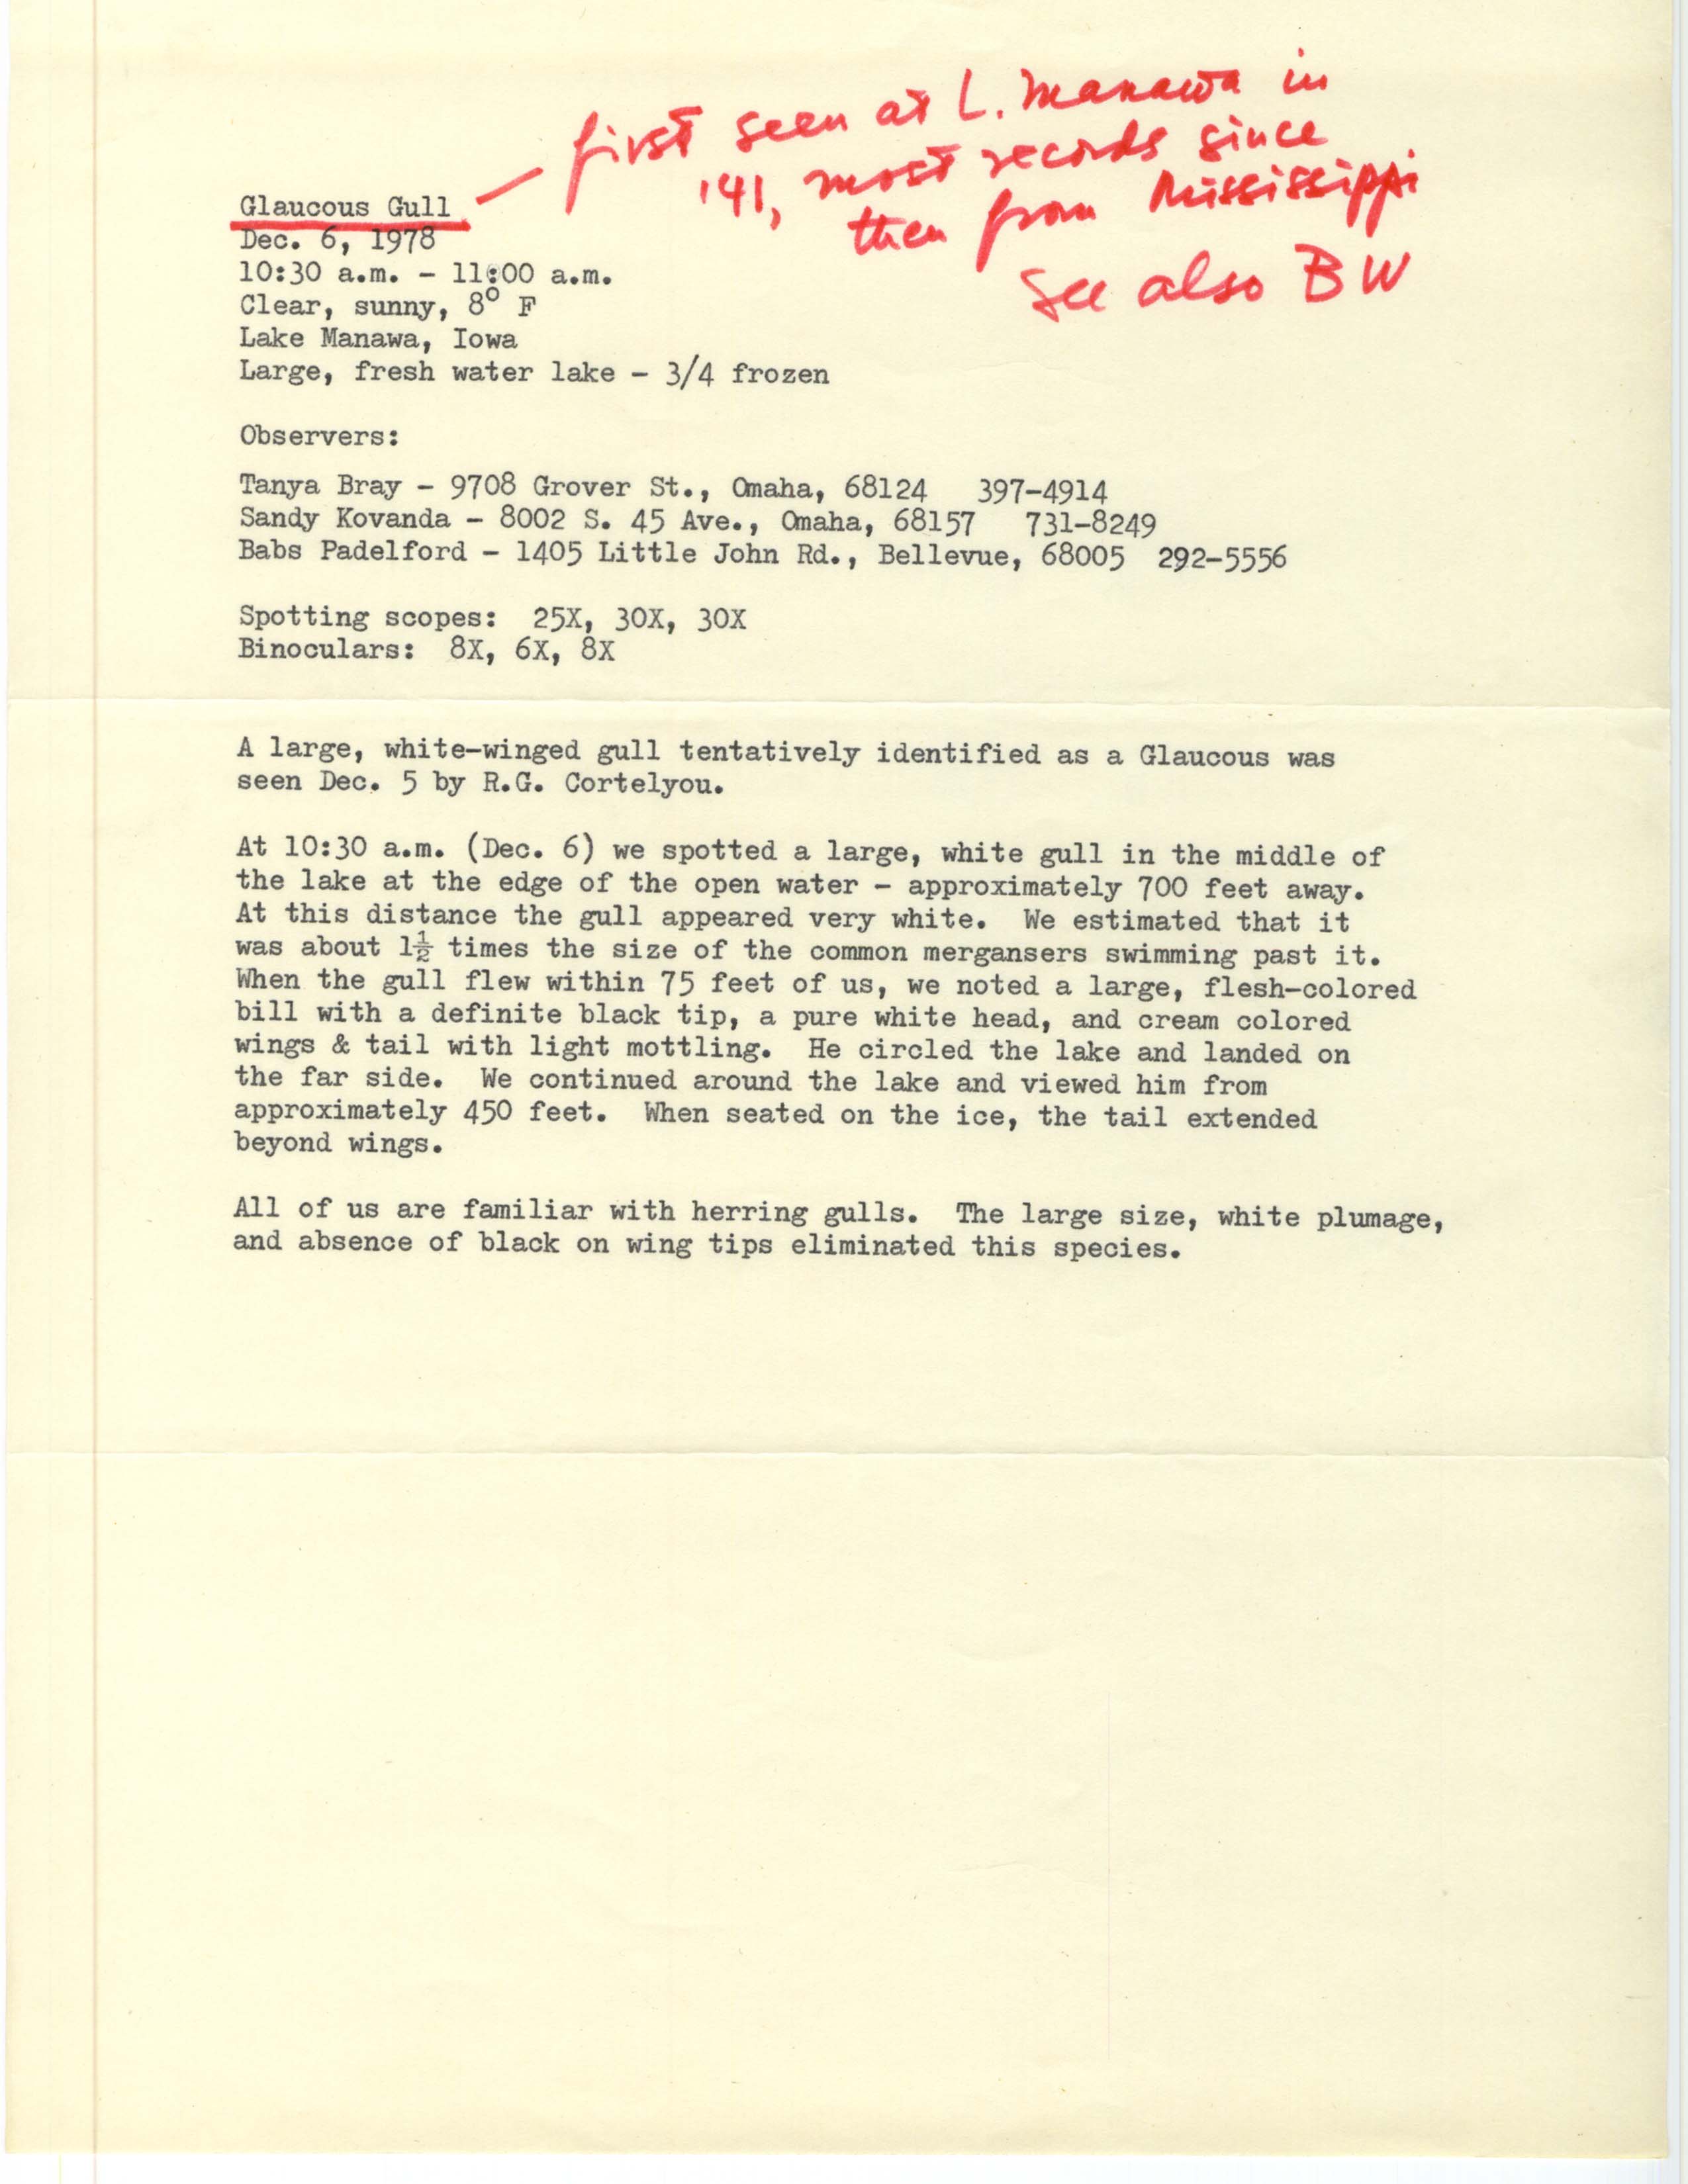 Rare bird documentation form for Glaucous Gull at Lake Manawa, 1978